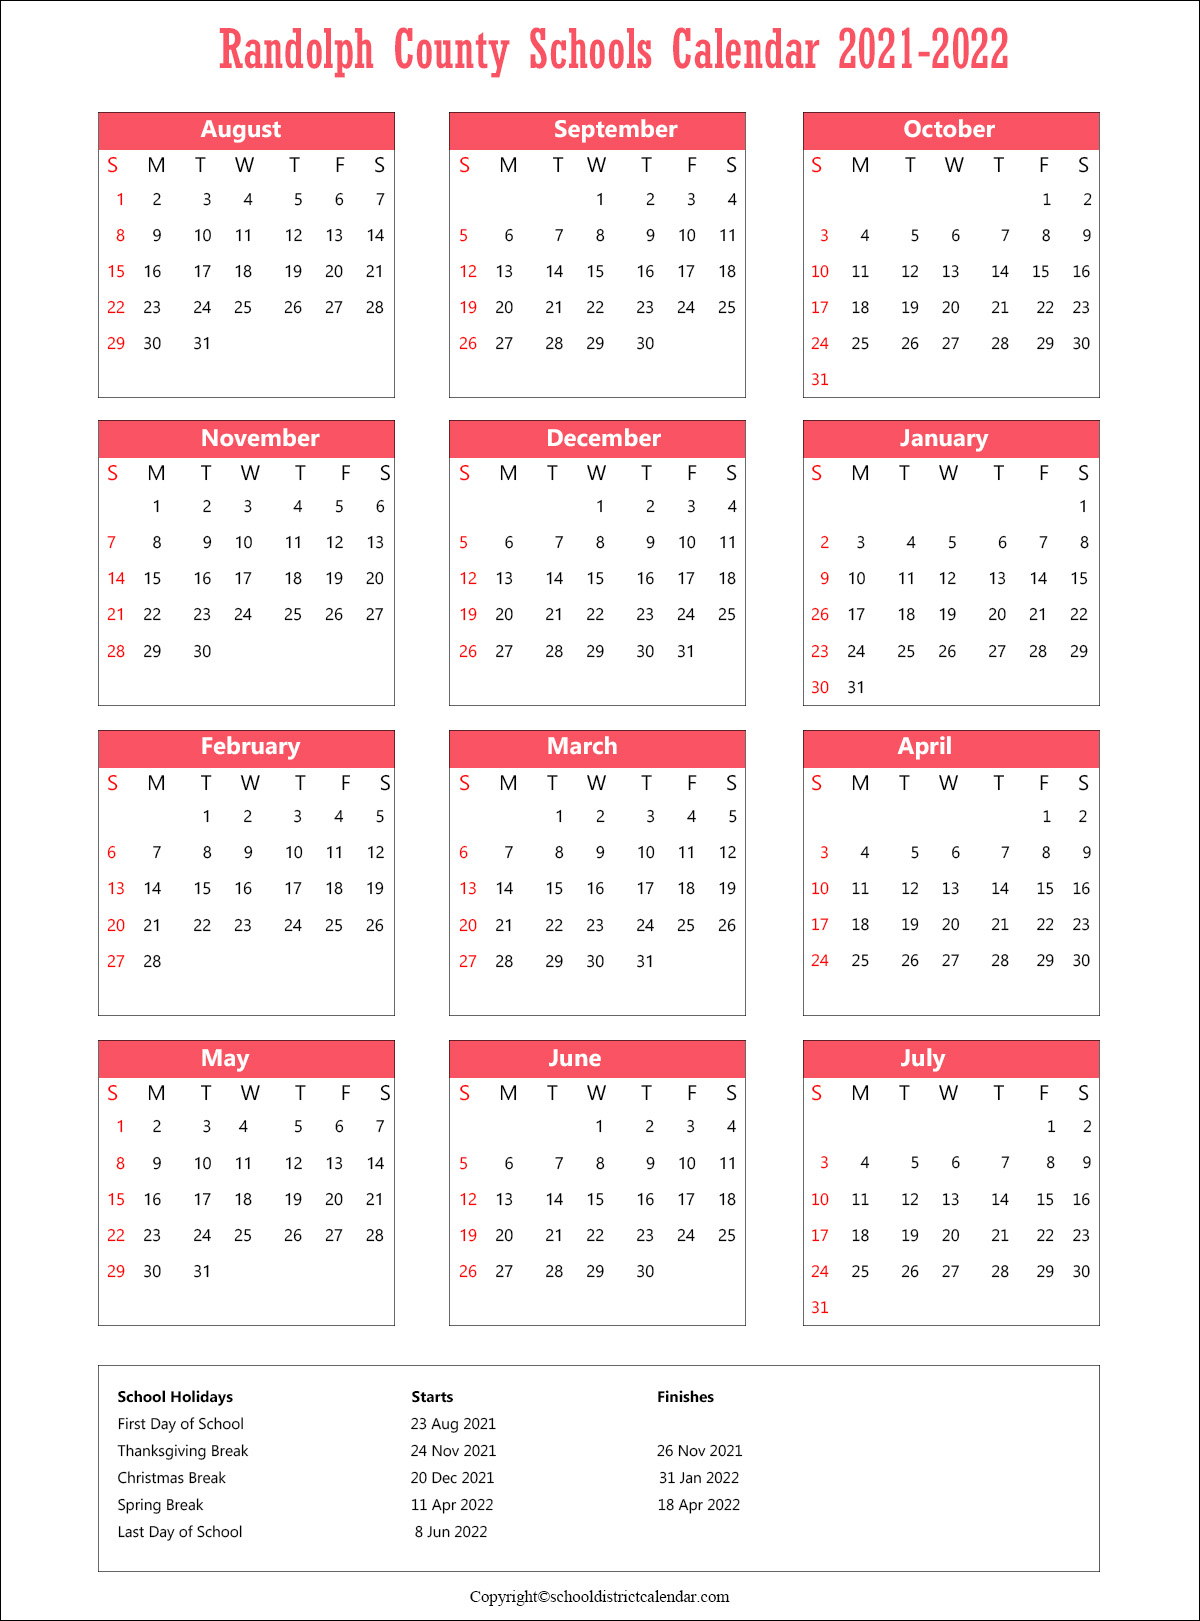 Randolph County Schools Calendar, Asheboro Holidays 2021